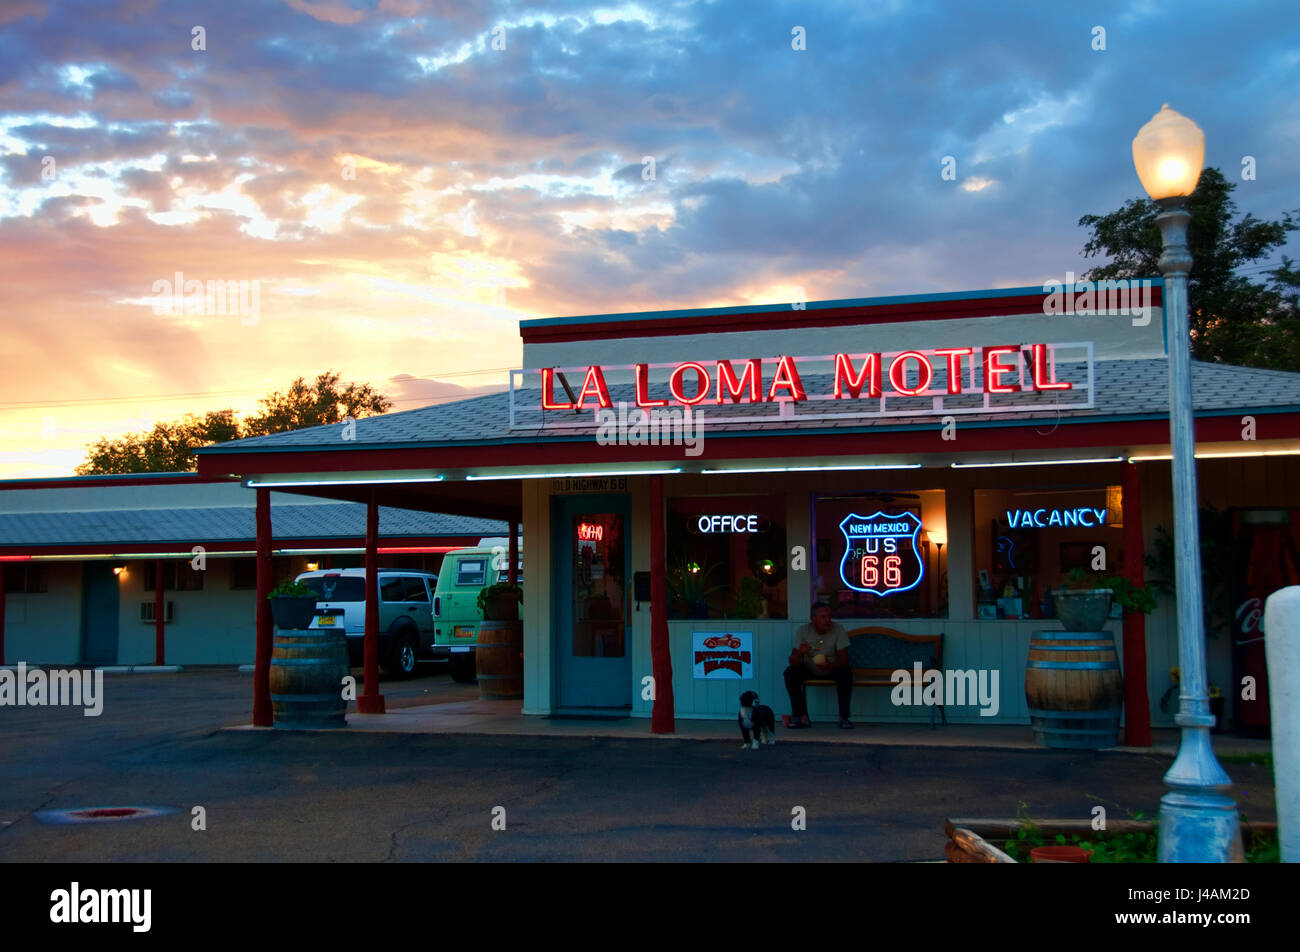 La Loma Motel Stock Photo